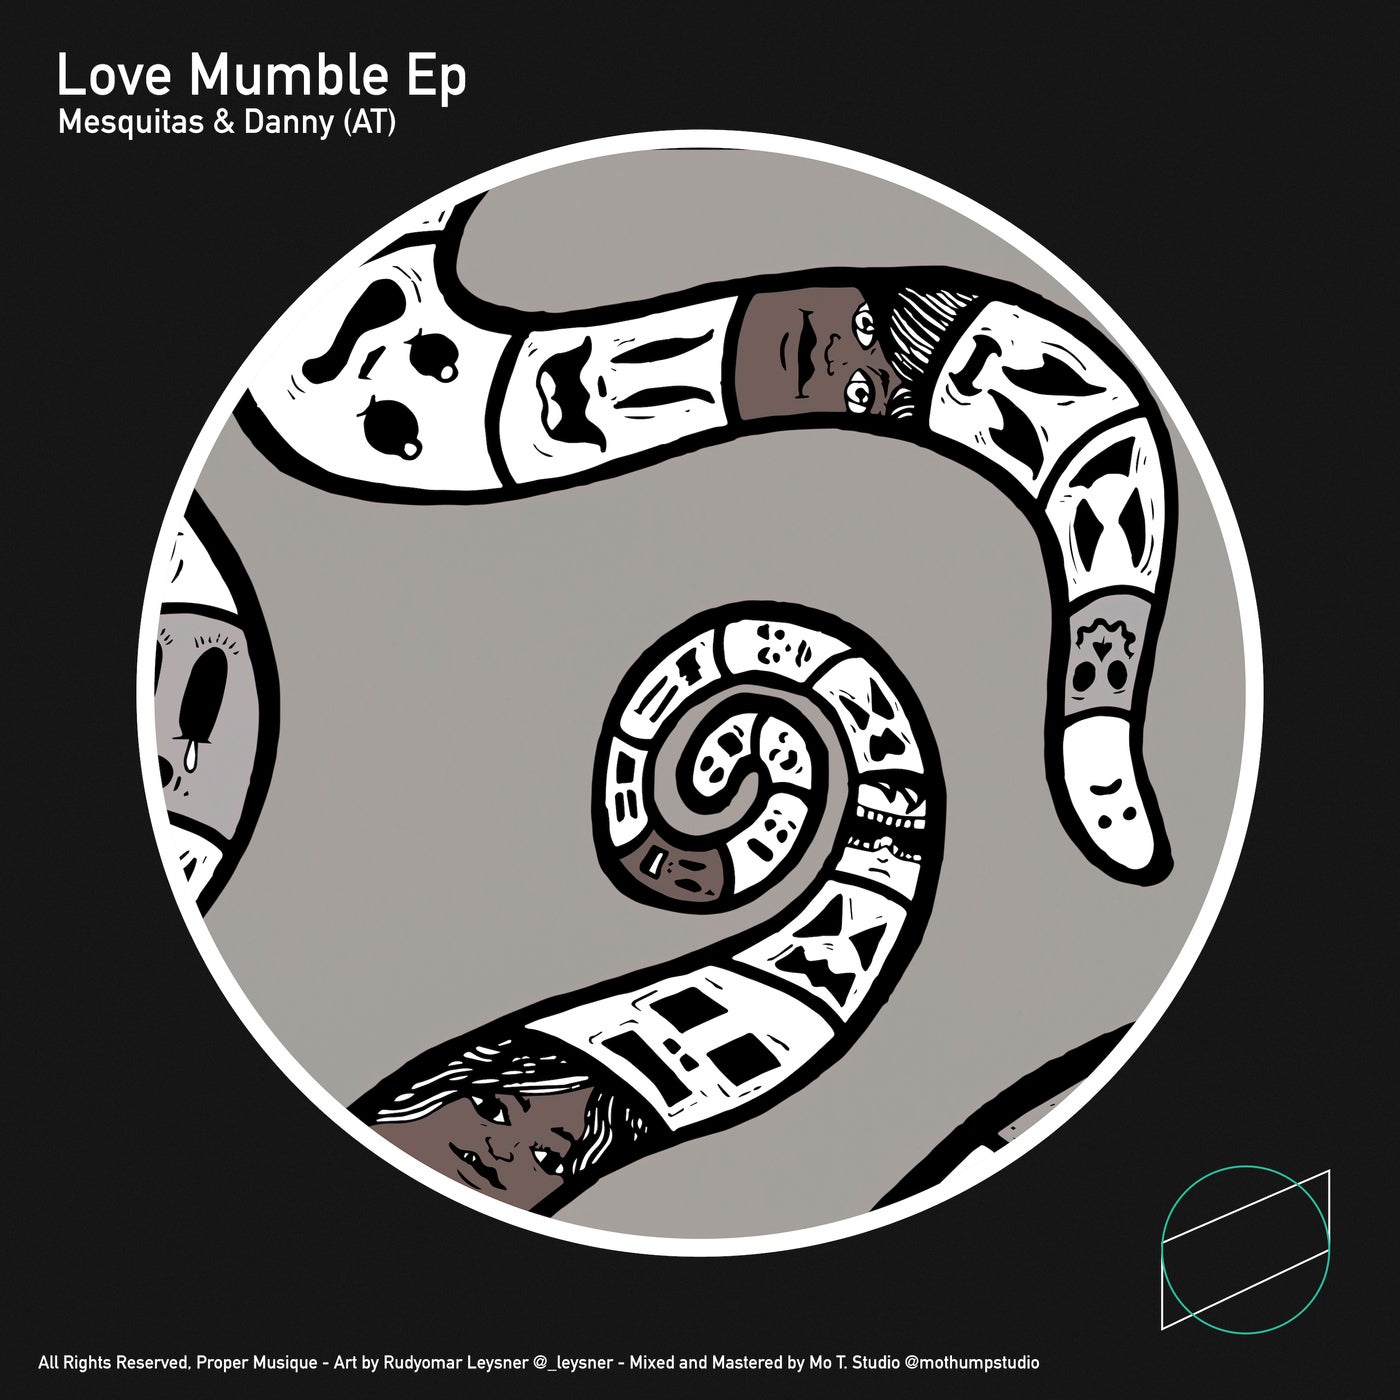 Love Mumble EP